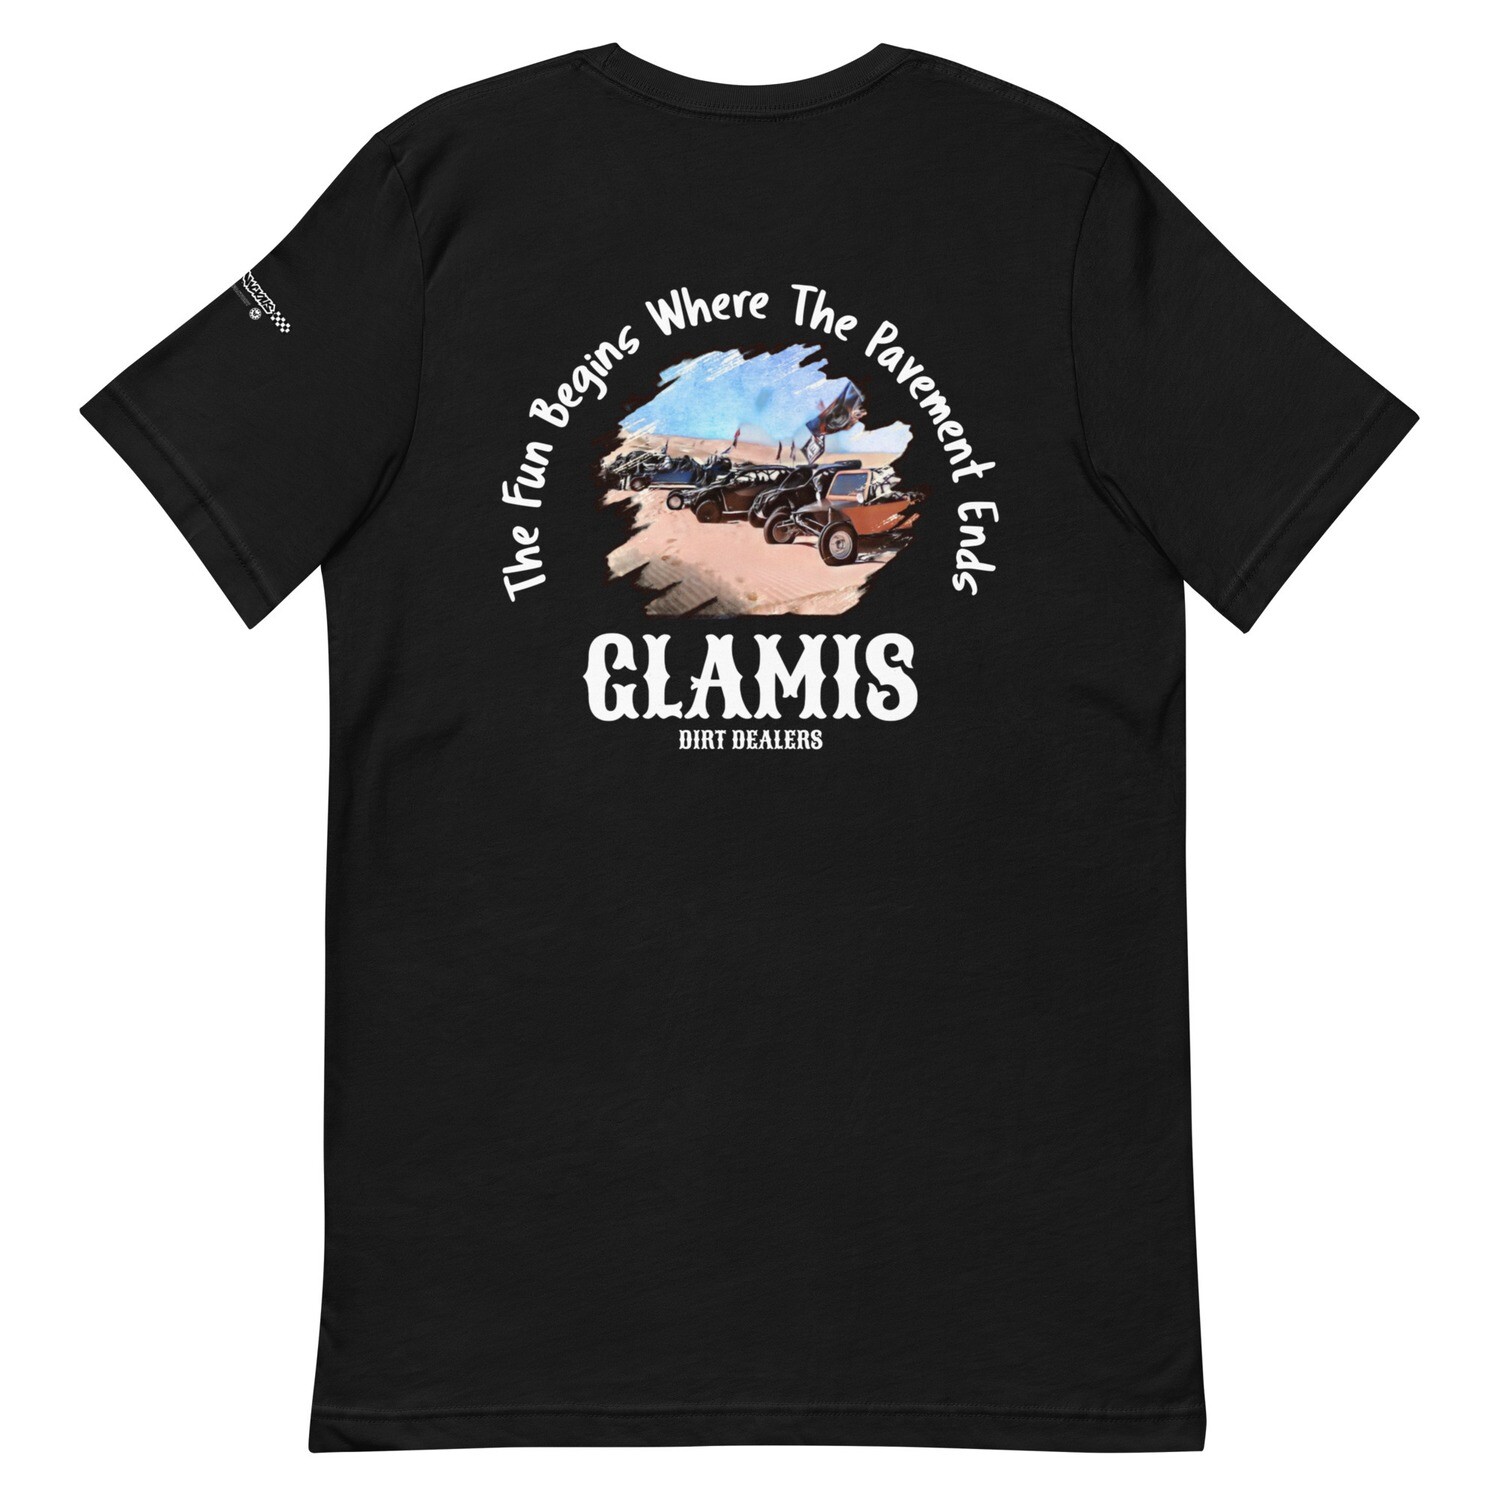 "Glamis Dirt Dealers" T-shirt